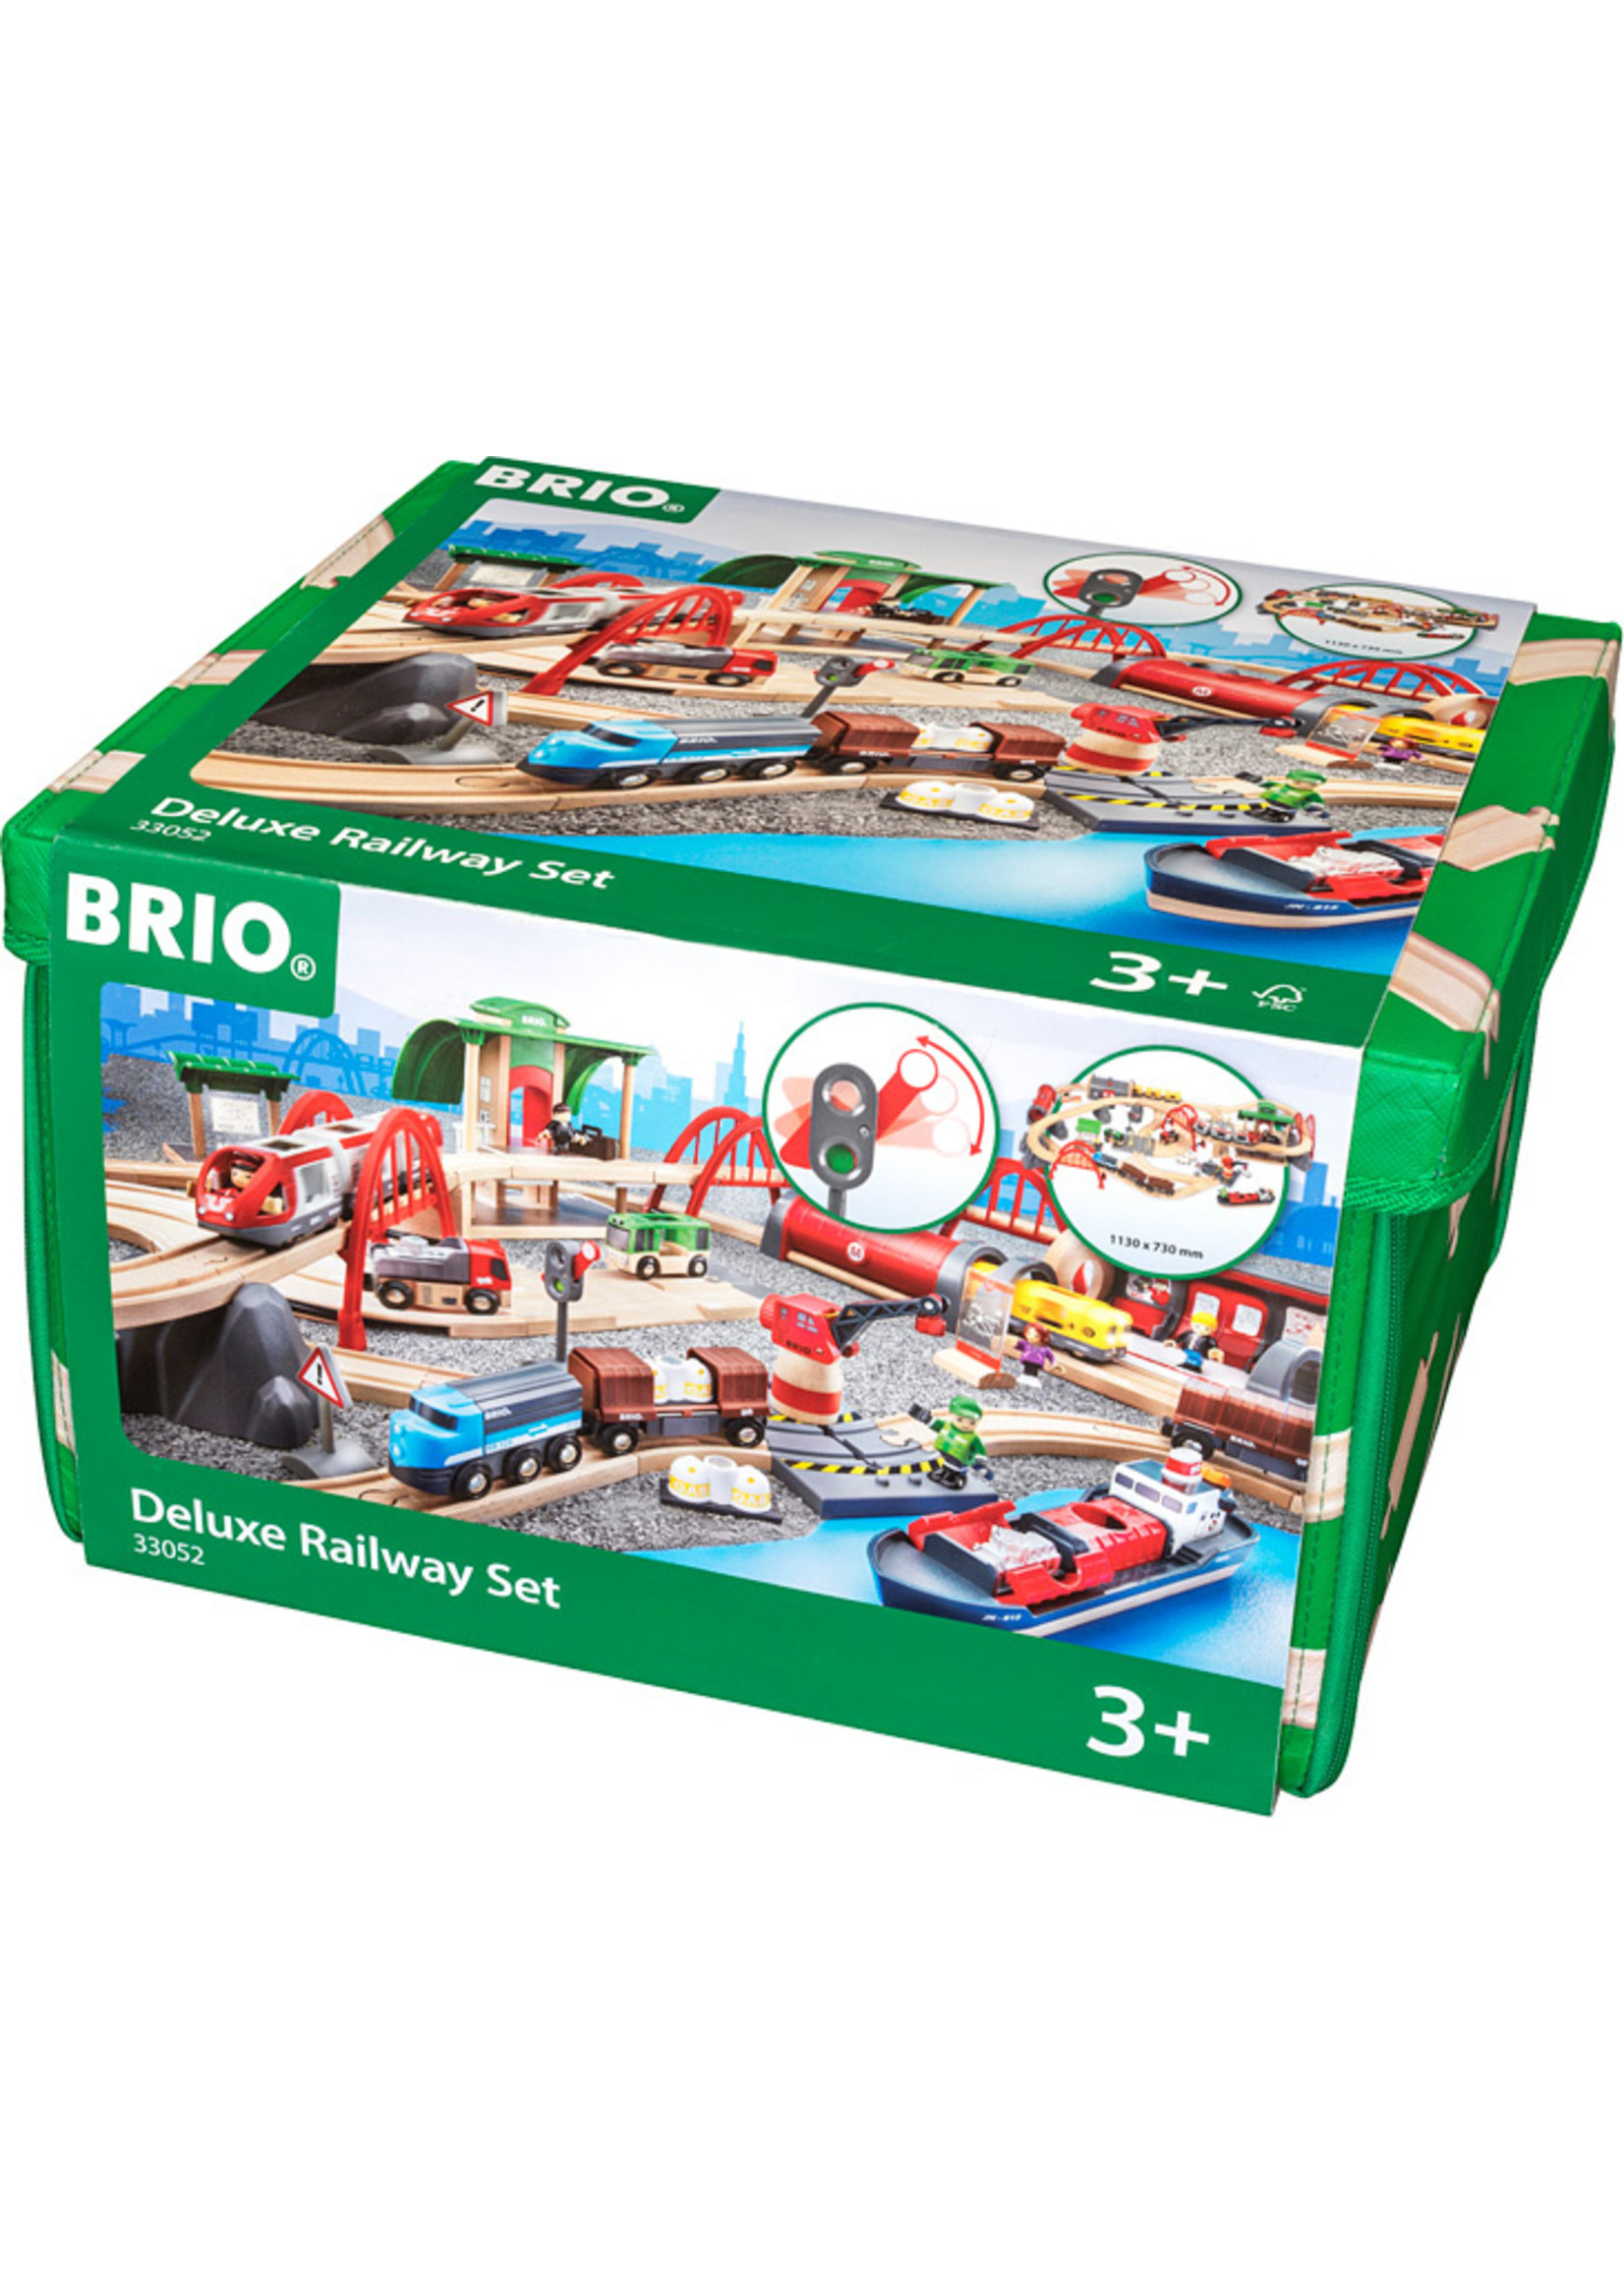 Brio 33052 - Deluxe Railway Set